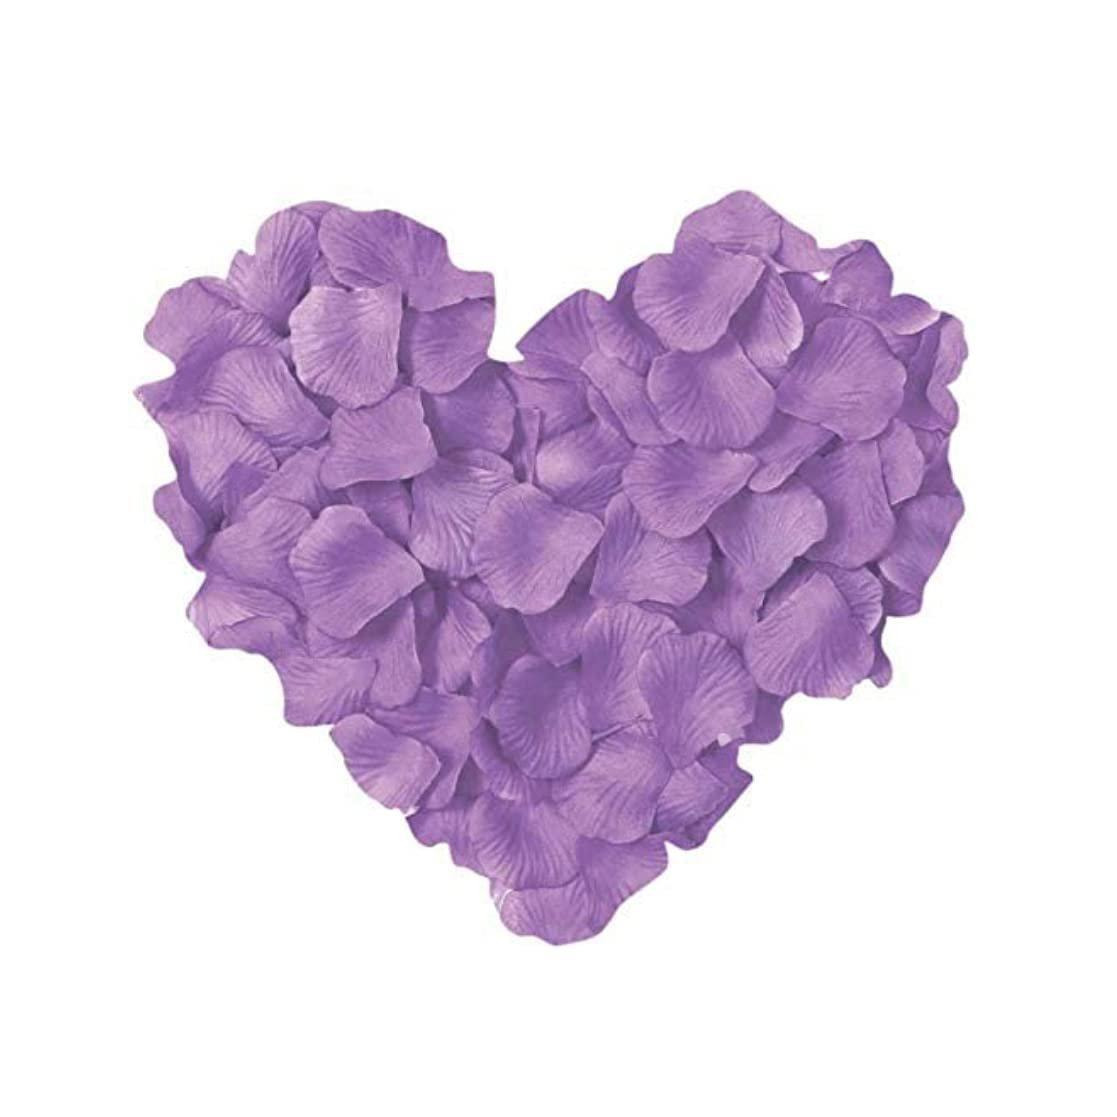 400pcs Light Purple Silk Rose Petals Wedding Mothers Day Wedding Confetti Anniversary Table Decorations - image 1